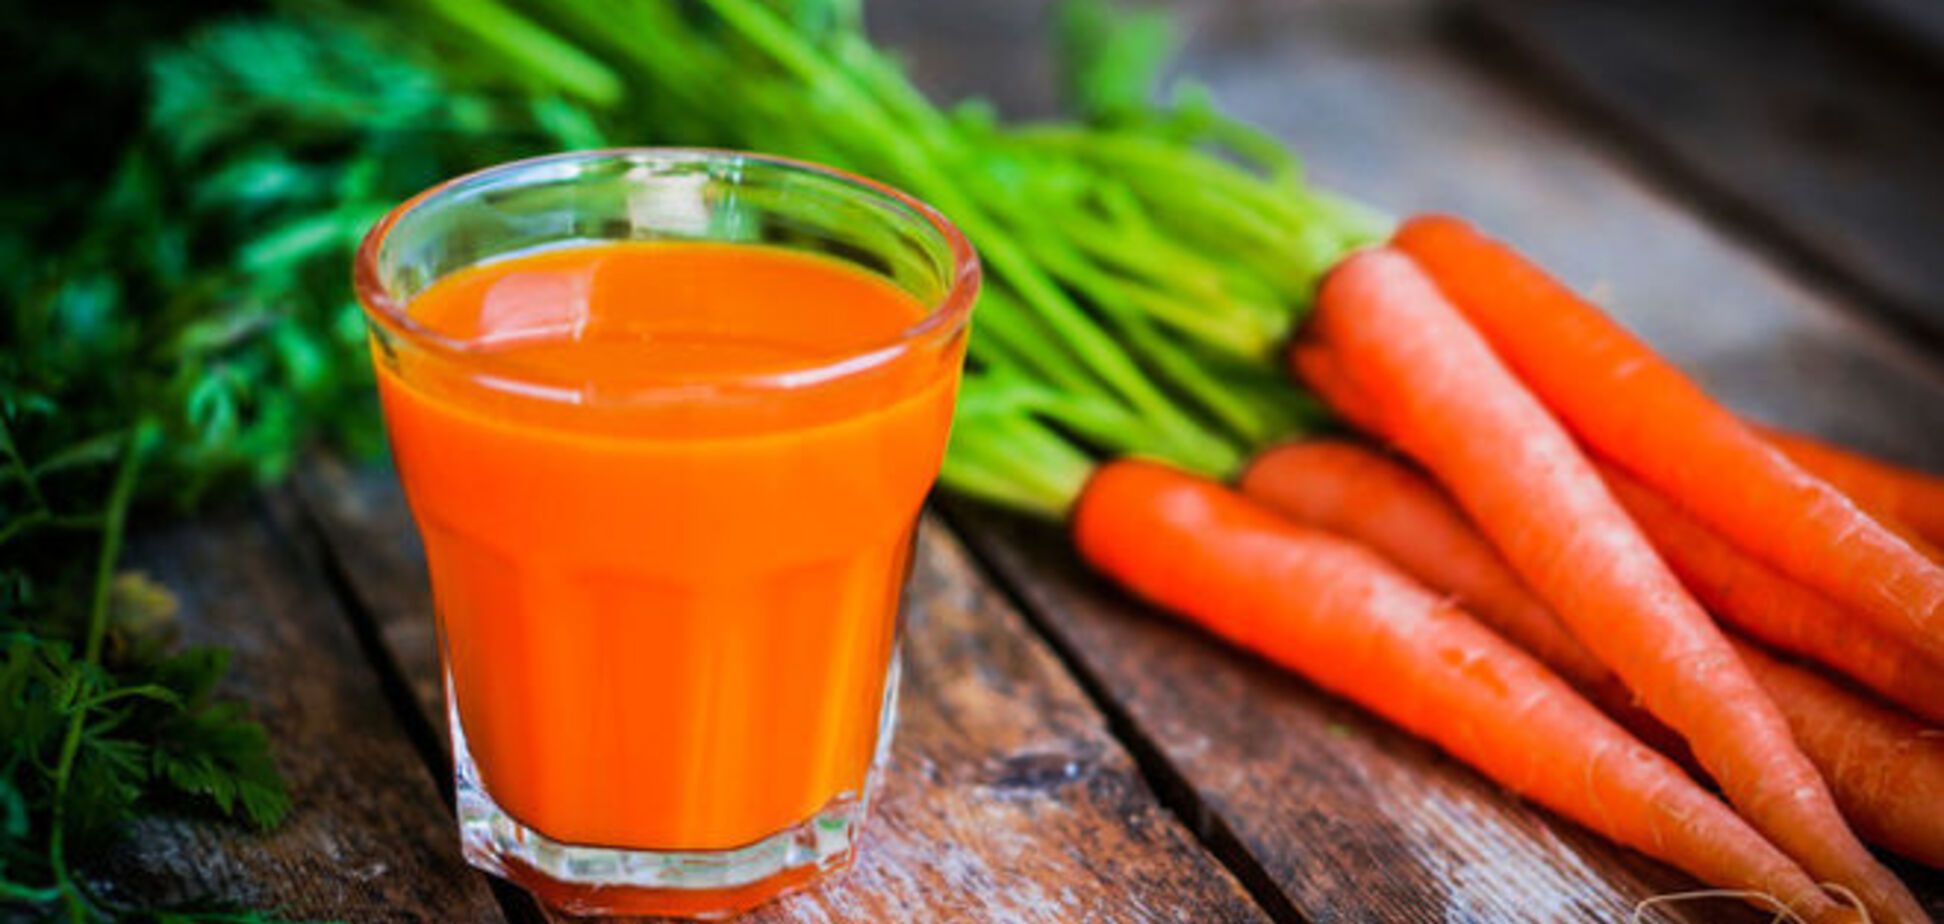 Морковный сок исцелил женщину от рака кишечника